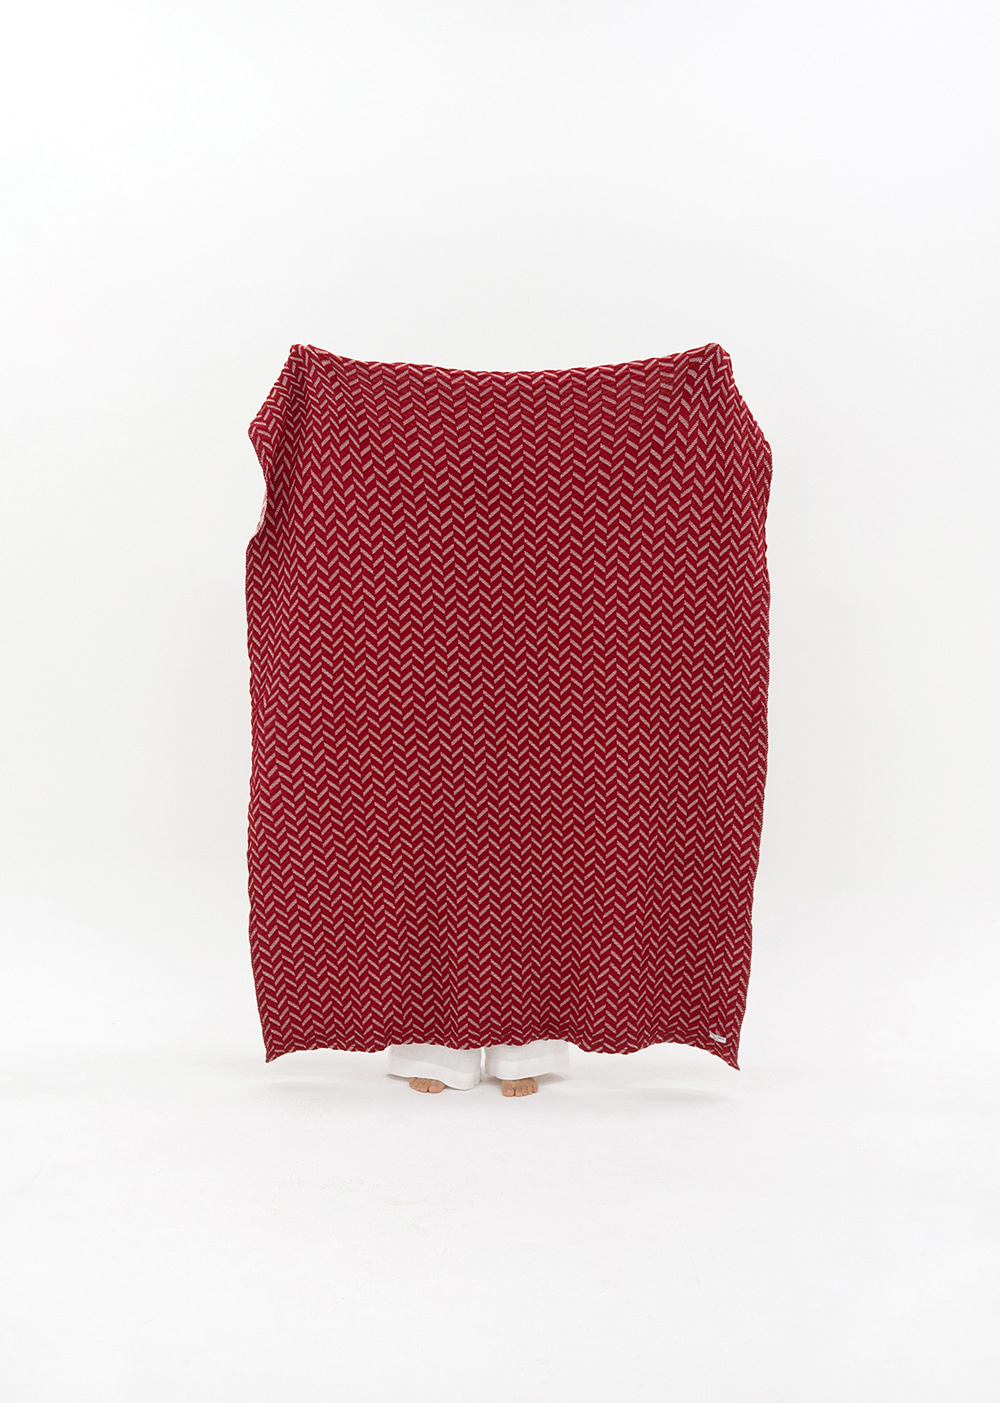 [30%] Slant blanket - Red